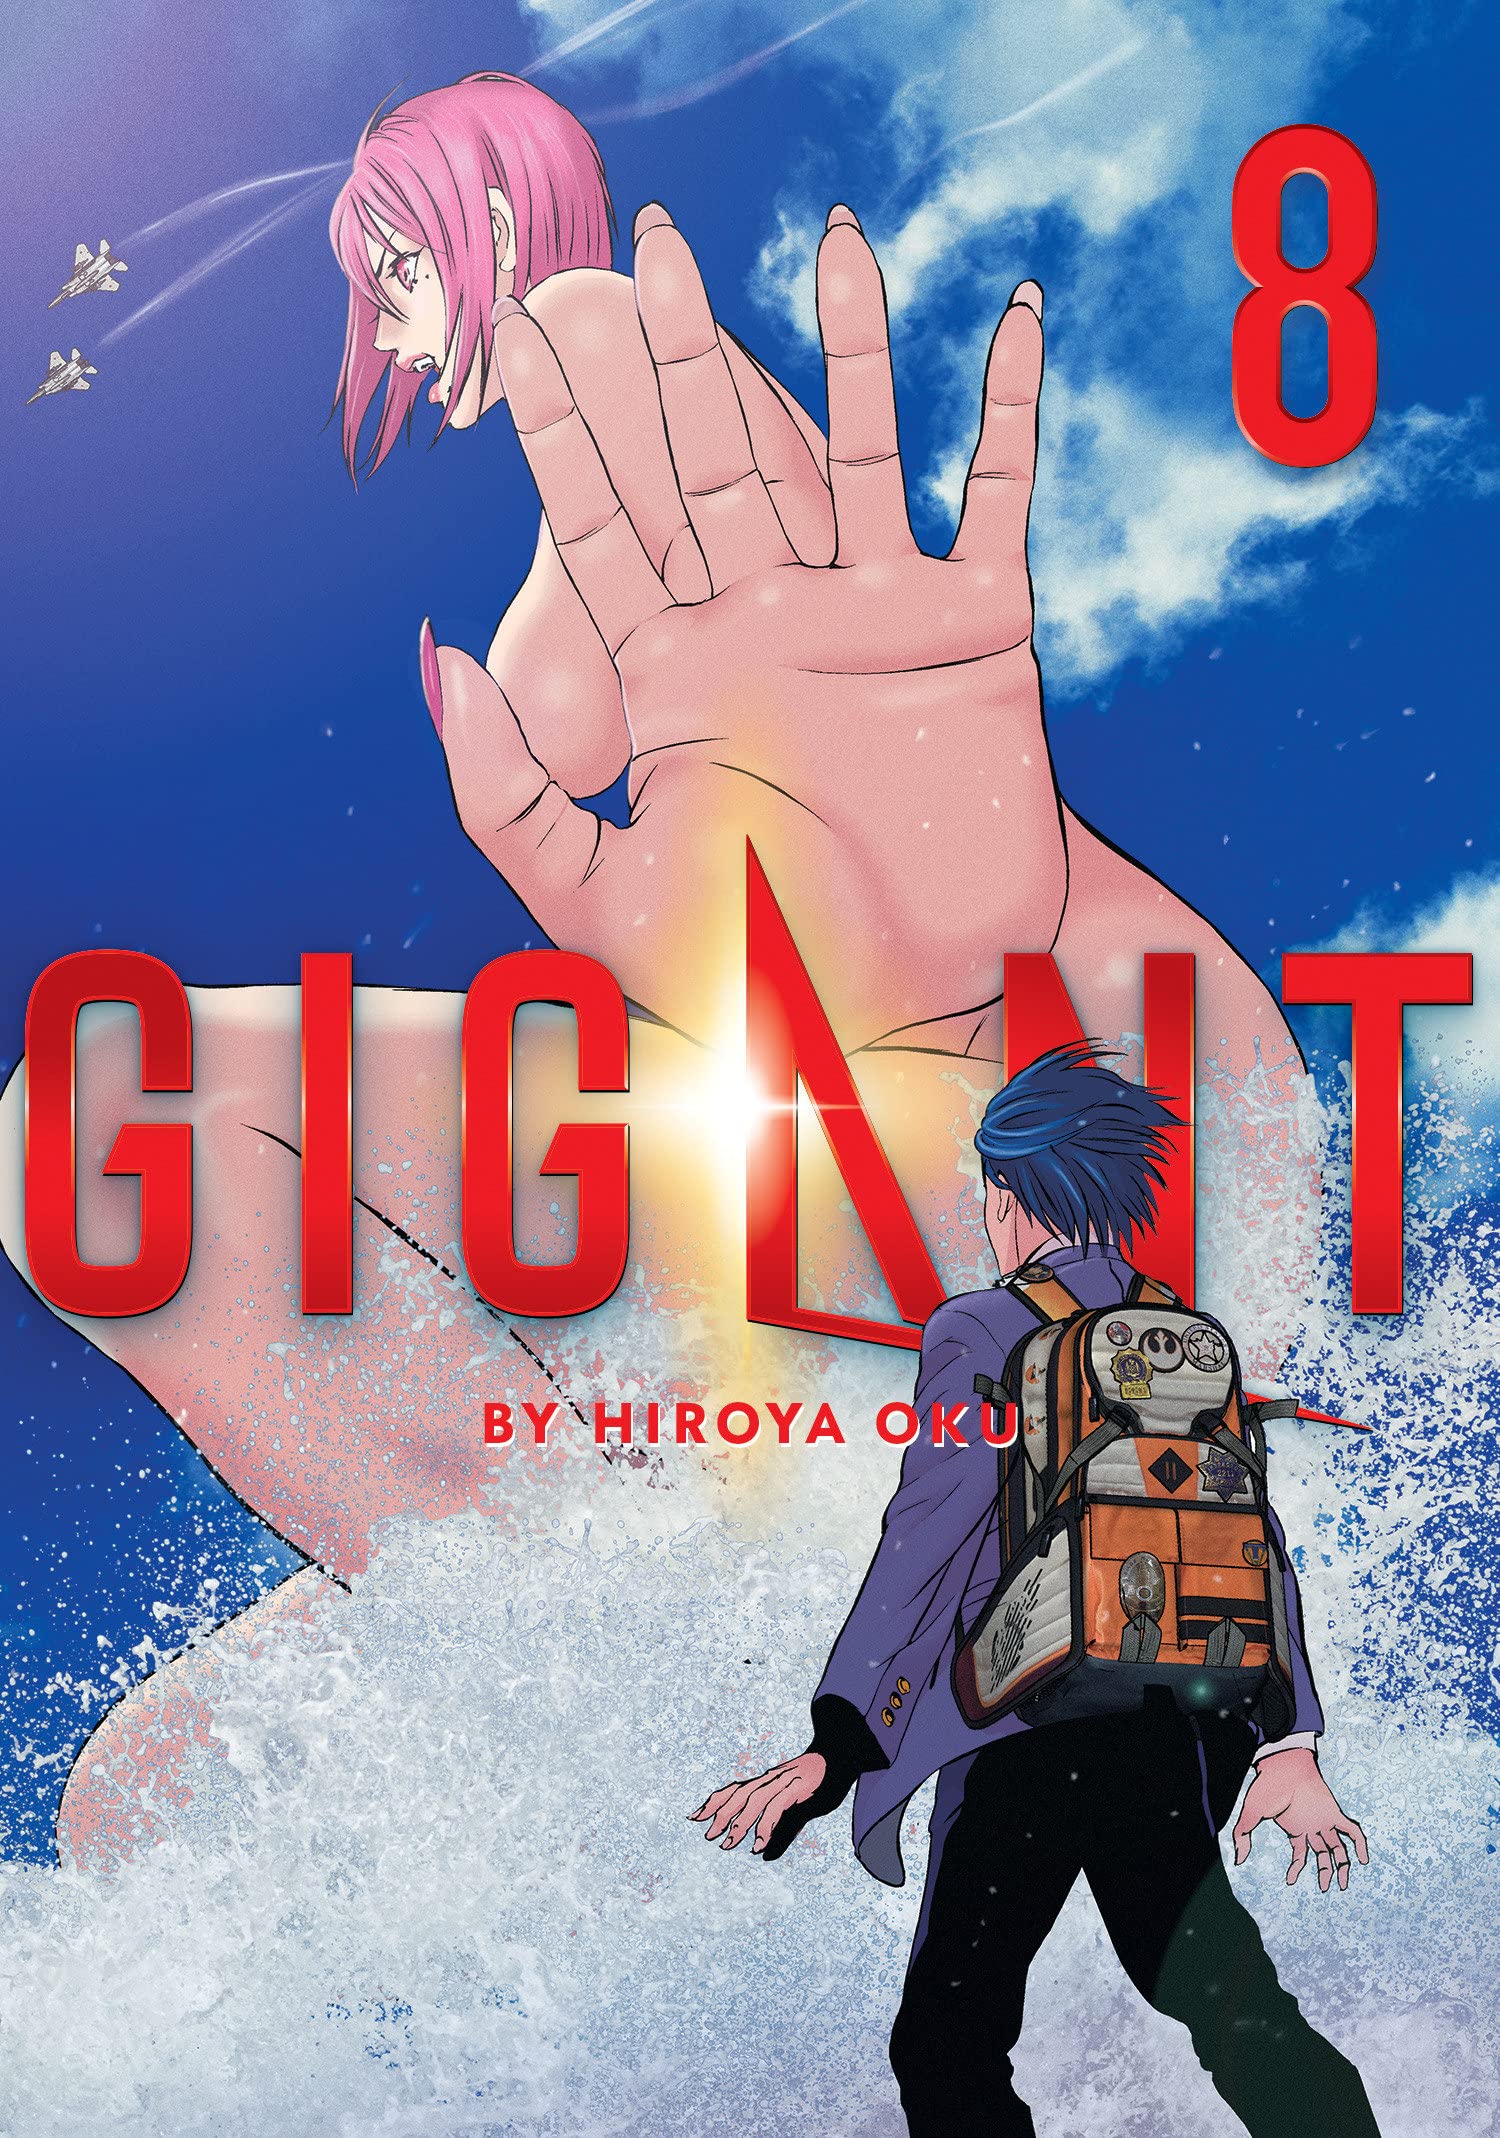 Gigant Vol. 8 ( Gigant ) - SureShot Books Publishing LLC